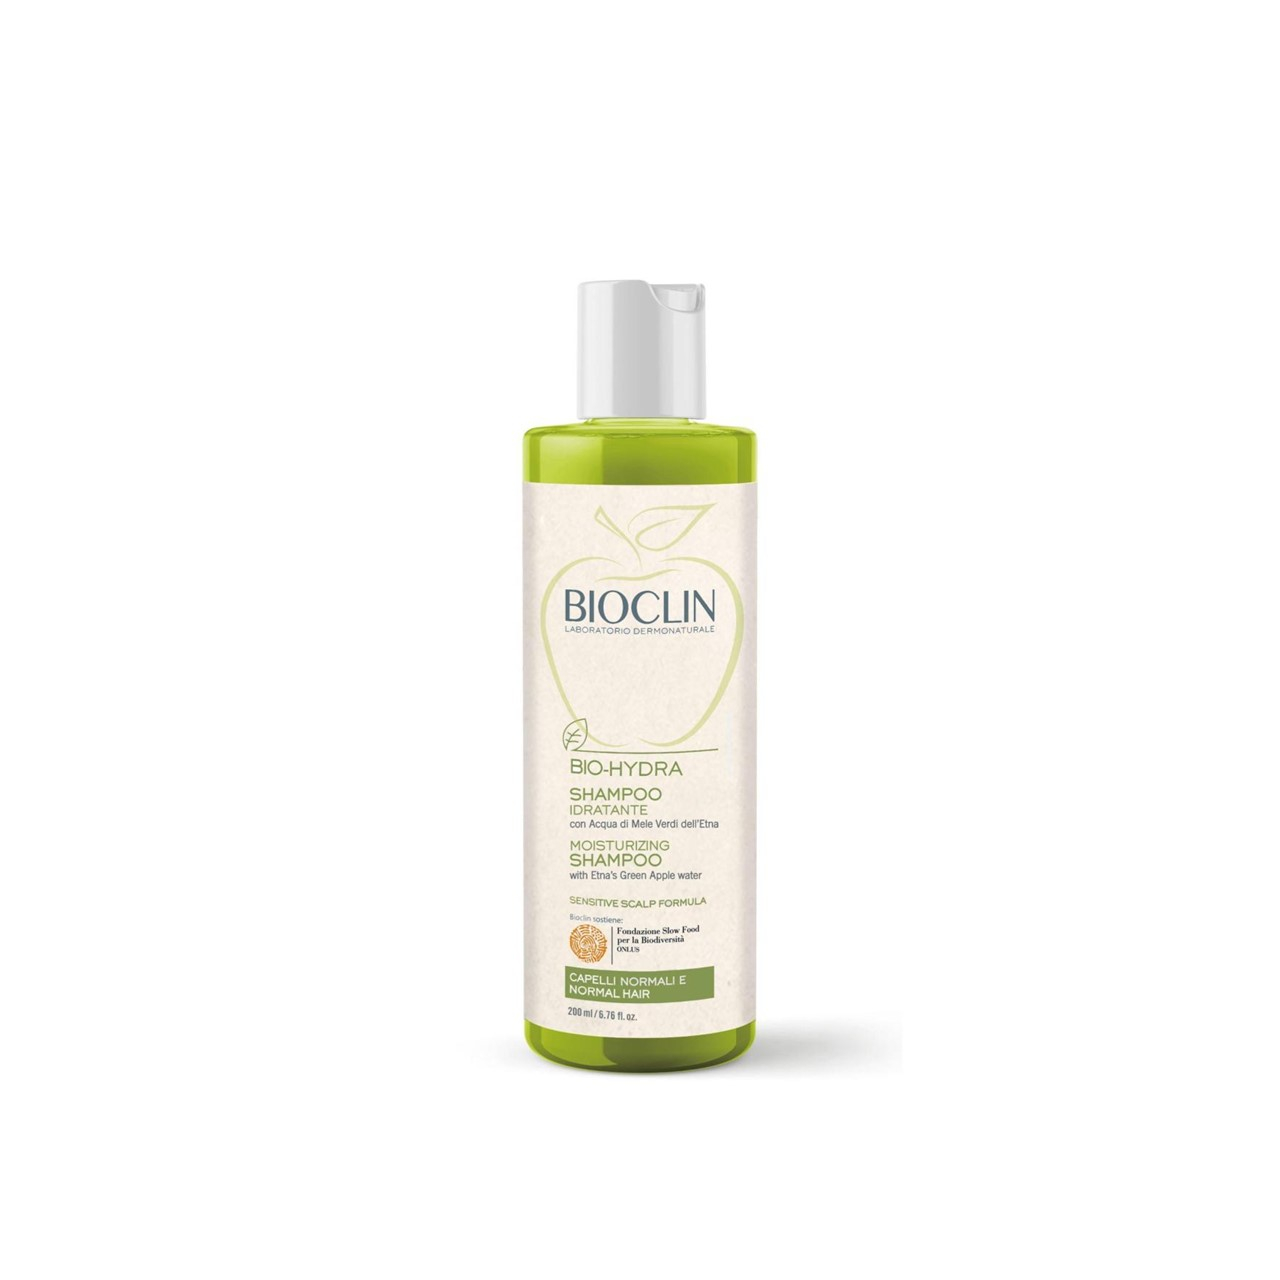 Bioclin Bio-Hydra Moisturizing Shampoo Normal Hair 200ml (6.76 fl oz)